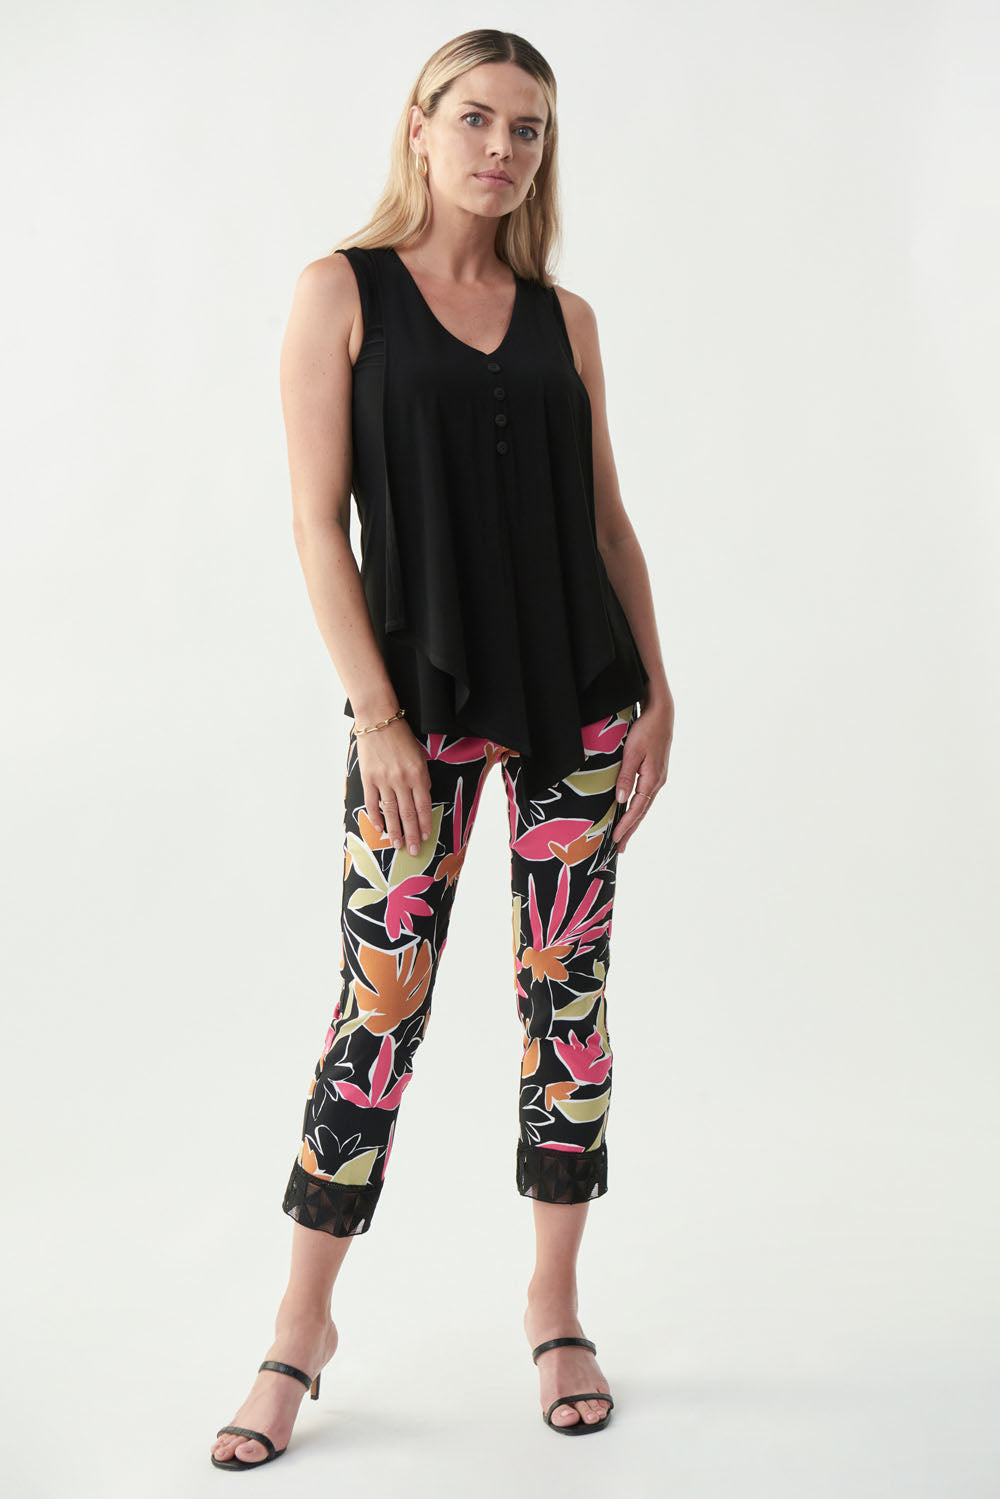 Joseph Ribkoff Black/Multi Floral Print Pants Style 221319 - Main Image